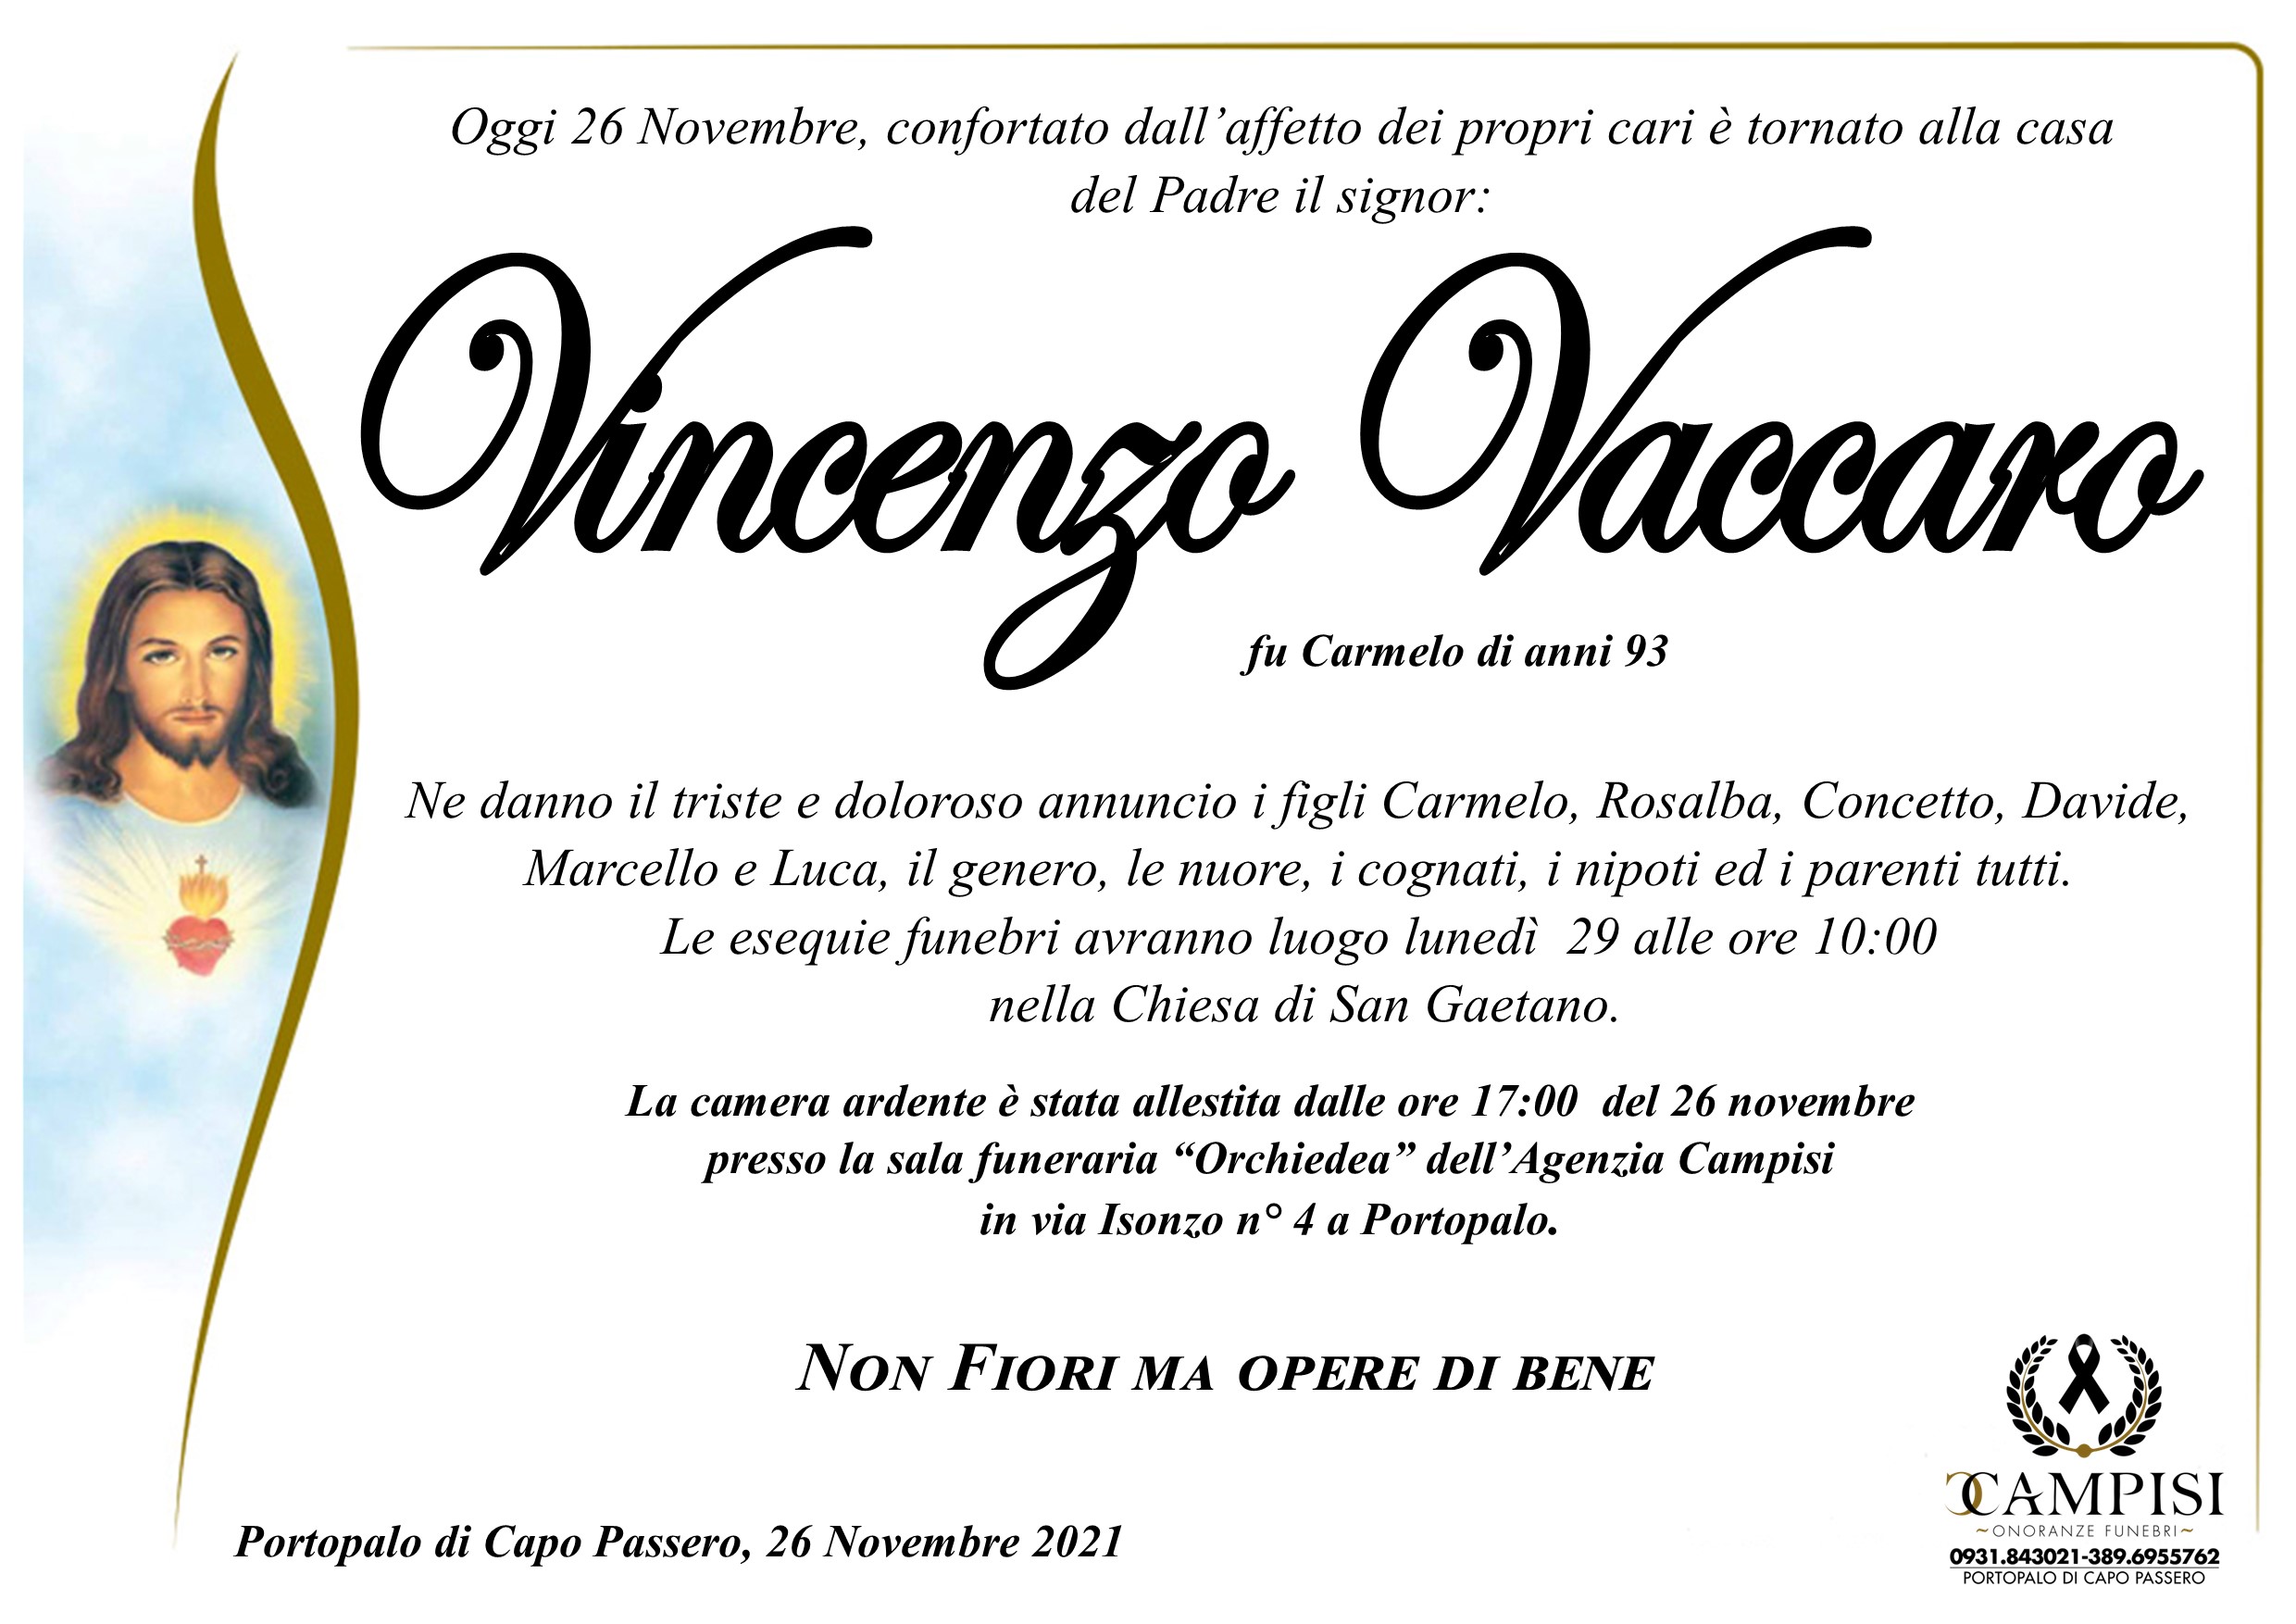 Vaccaro Vincenzo